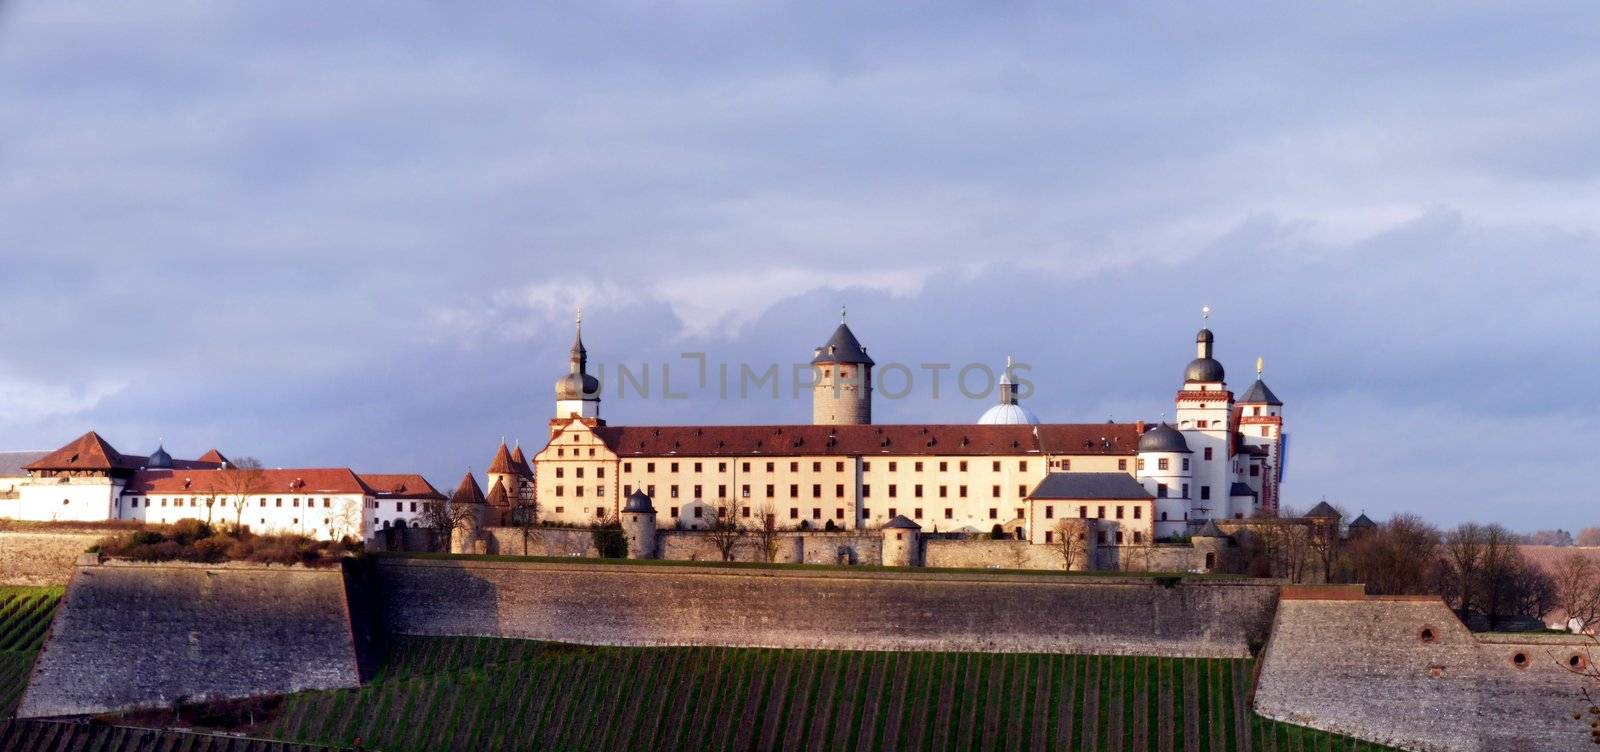 Festung Marienberg by hlehnerer